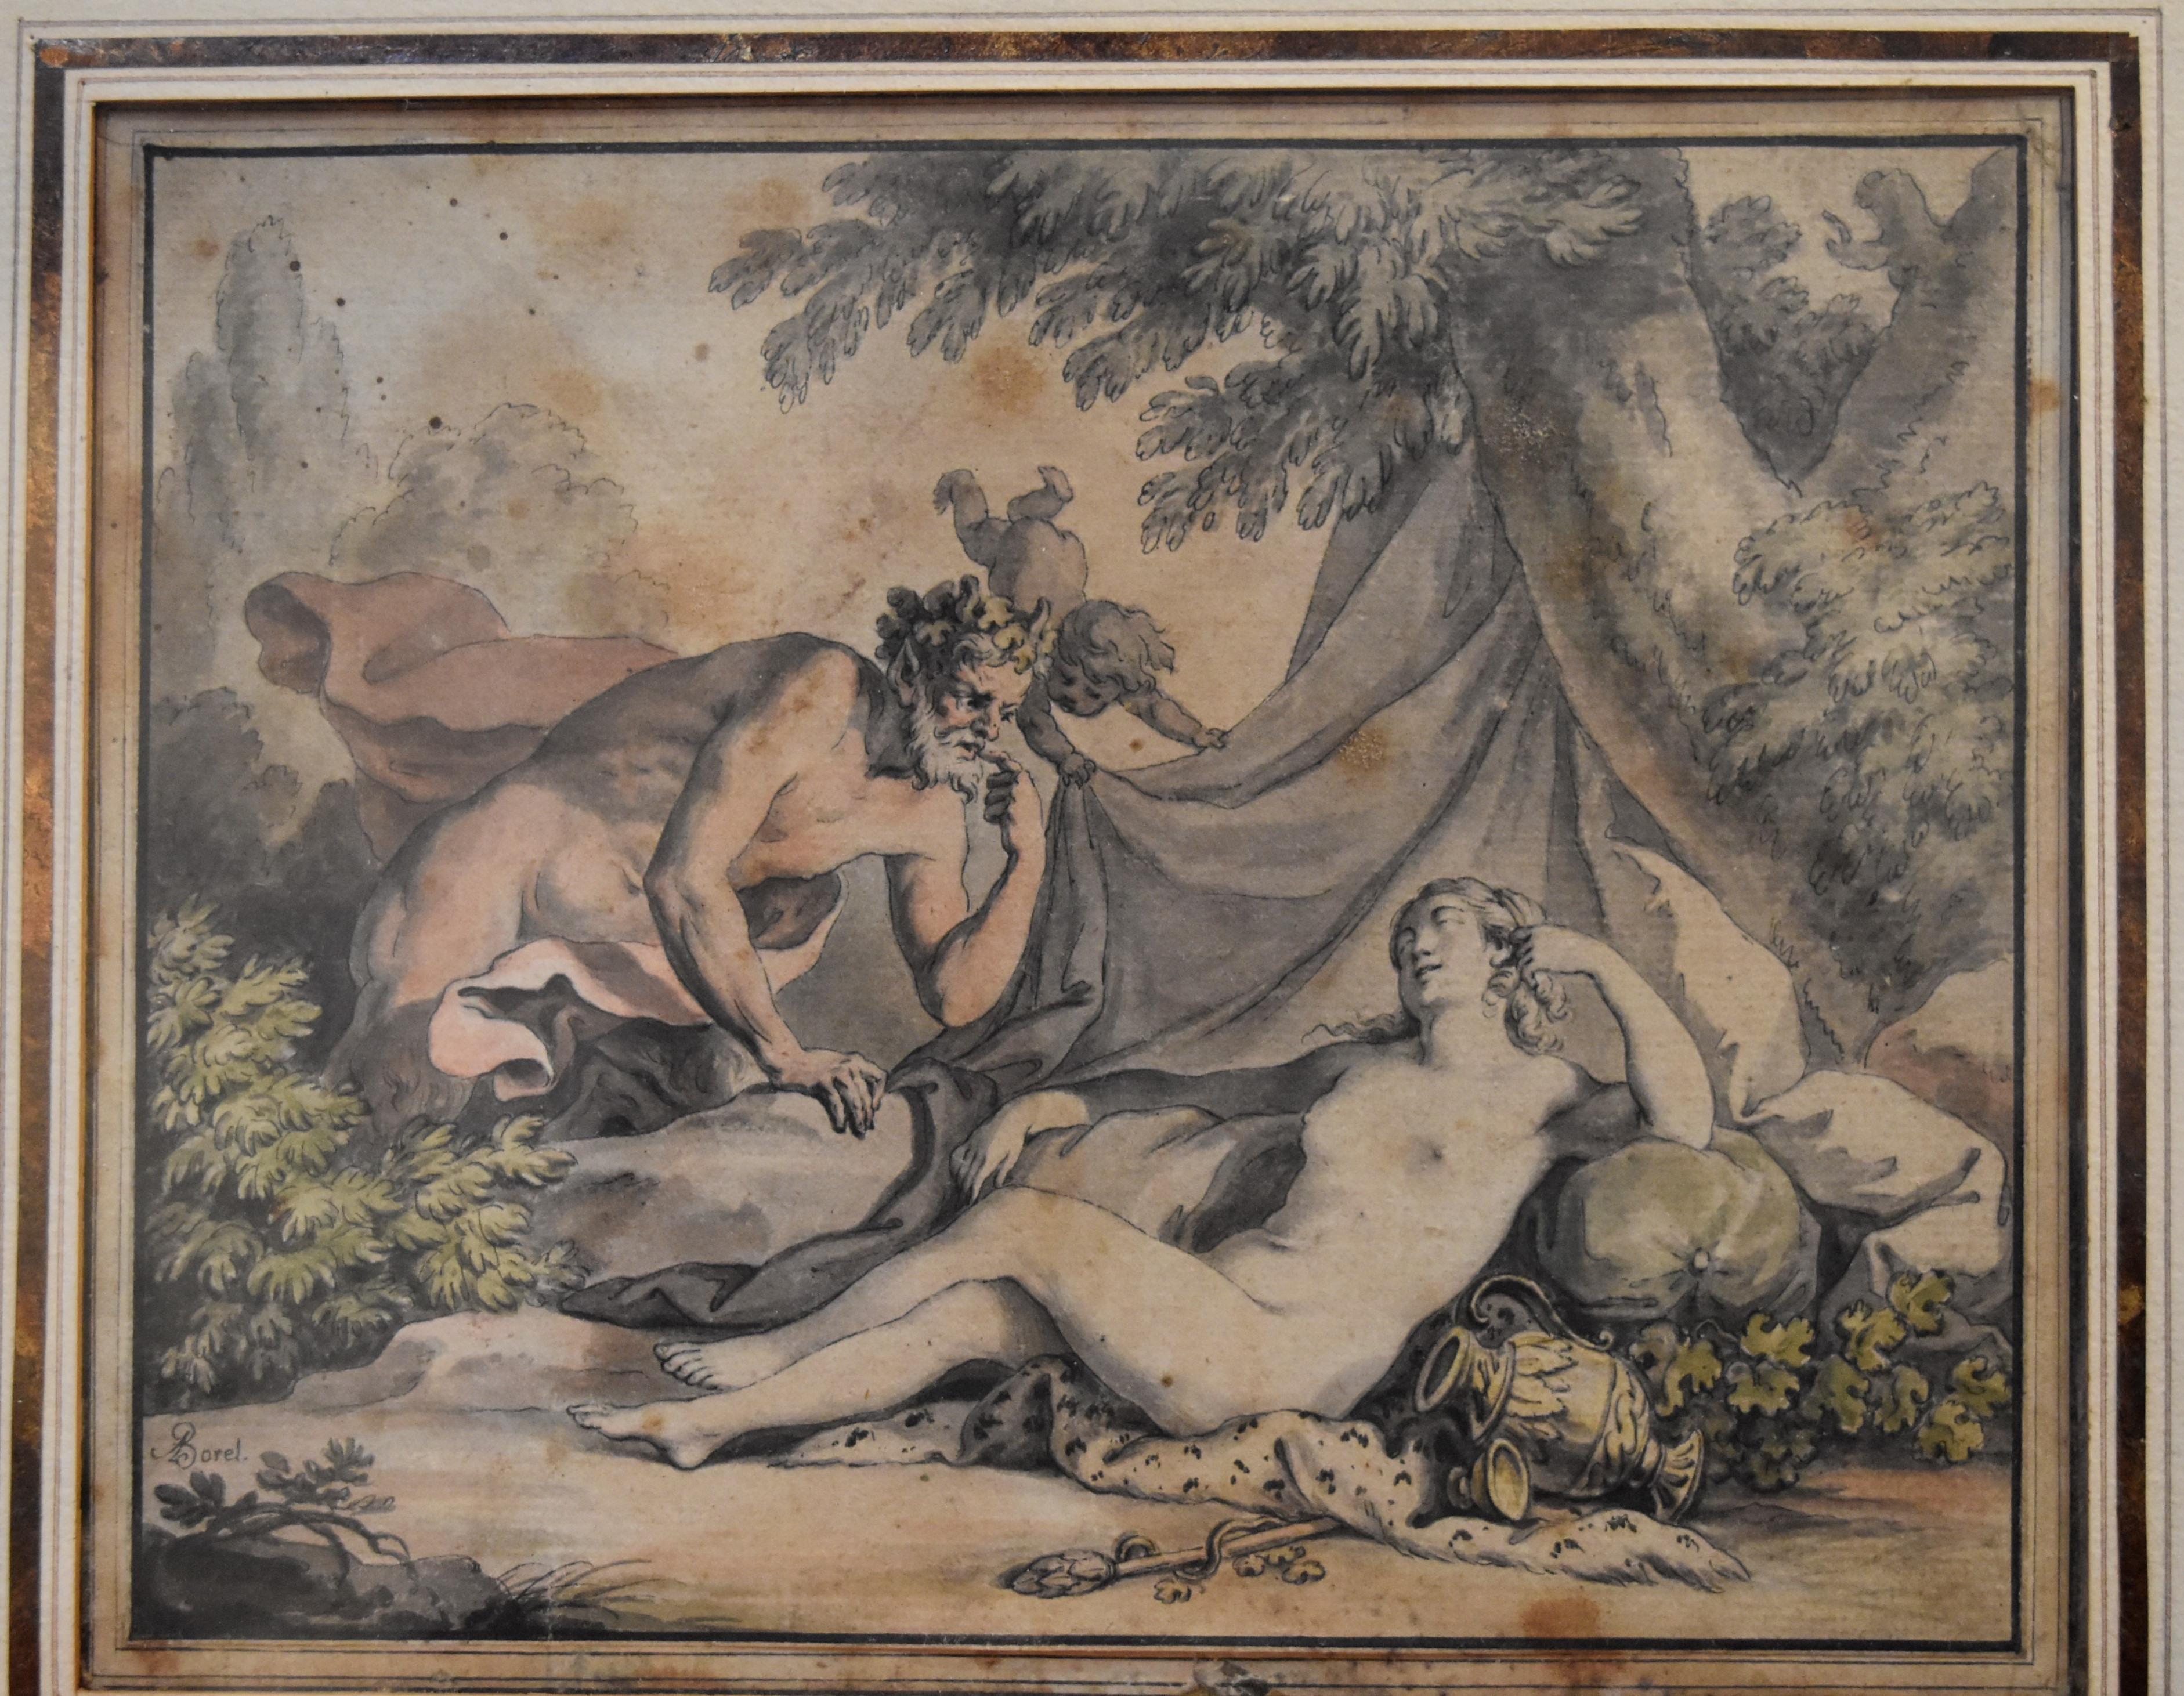 Antoine Borel (1743-1810), A sleeping Nymph and a Satyr, watercolor 3